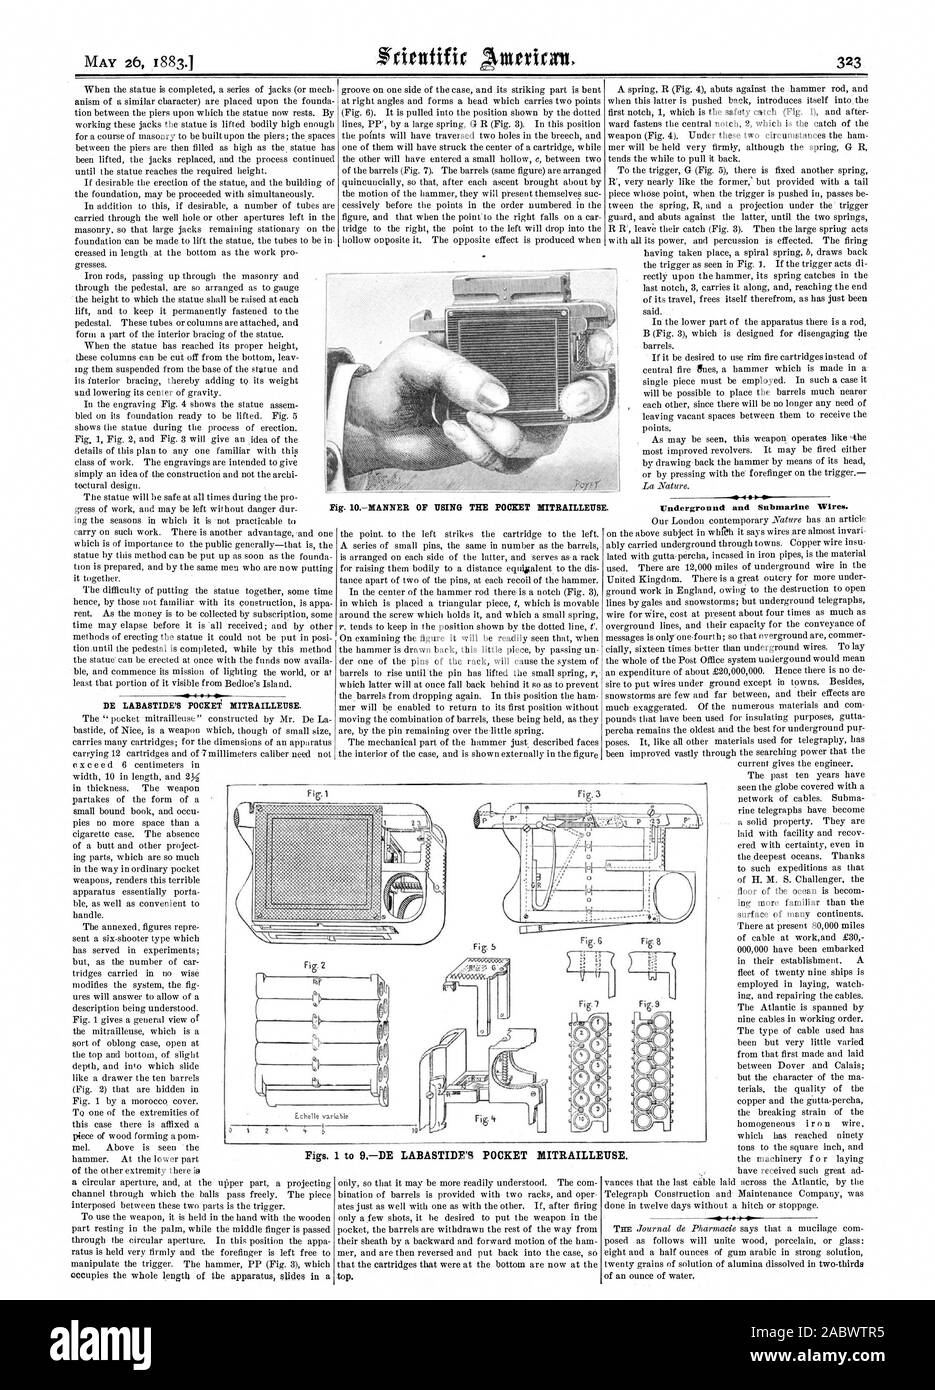 Underground and Submarine Wires. Figs. 1 to 9DE LABASTIDE'S POCKET 31ITRAILLEUSE., scientific american, 1883-05-26 Stock Photo